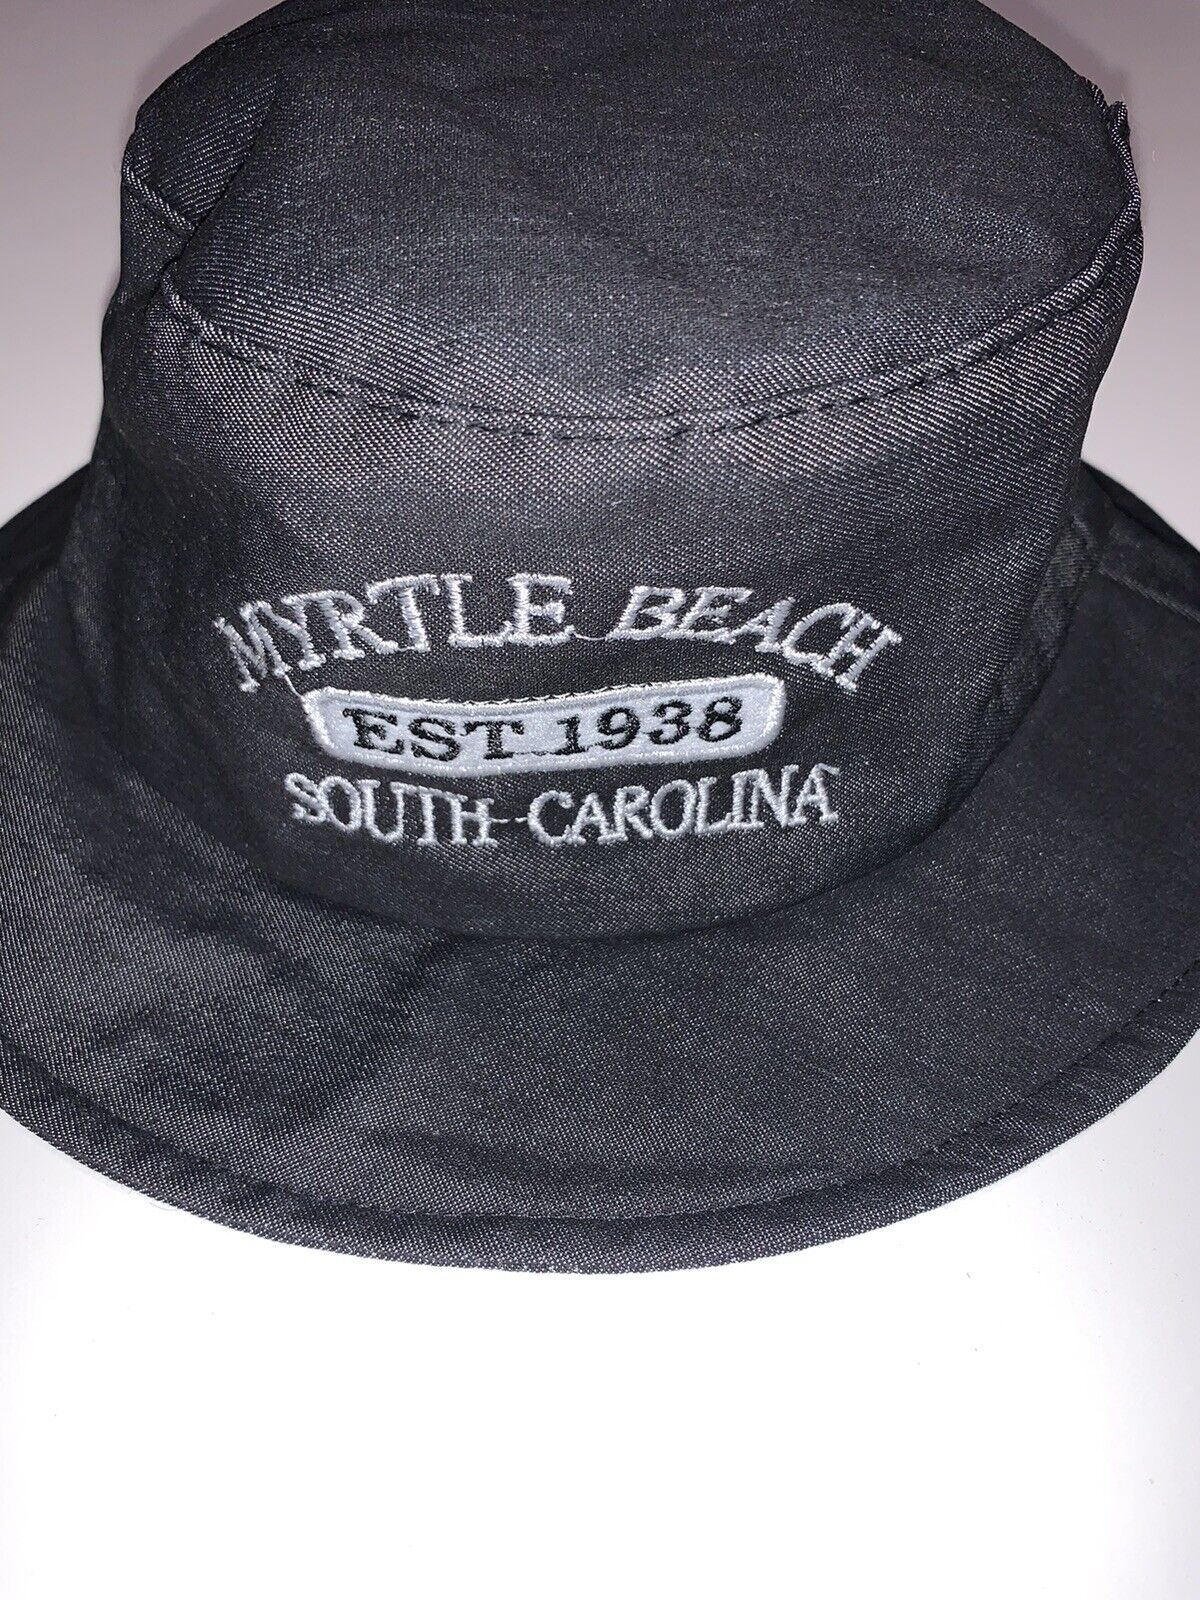 Myrtle Beach South Carolina Kids 3T-5T Youth Bucket Hat 20” Circ